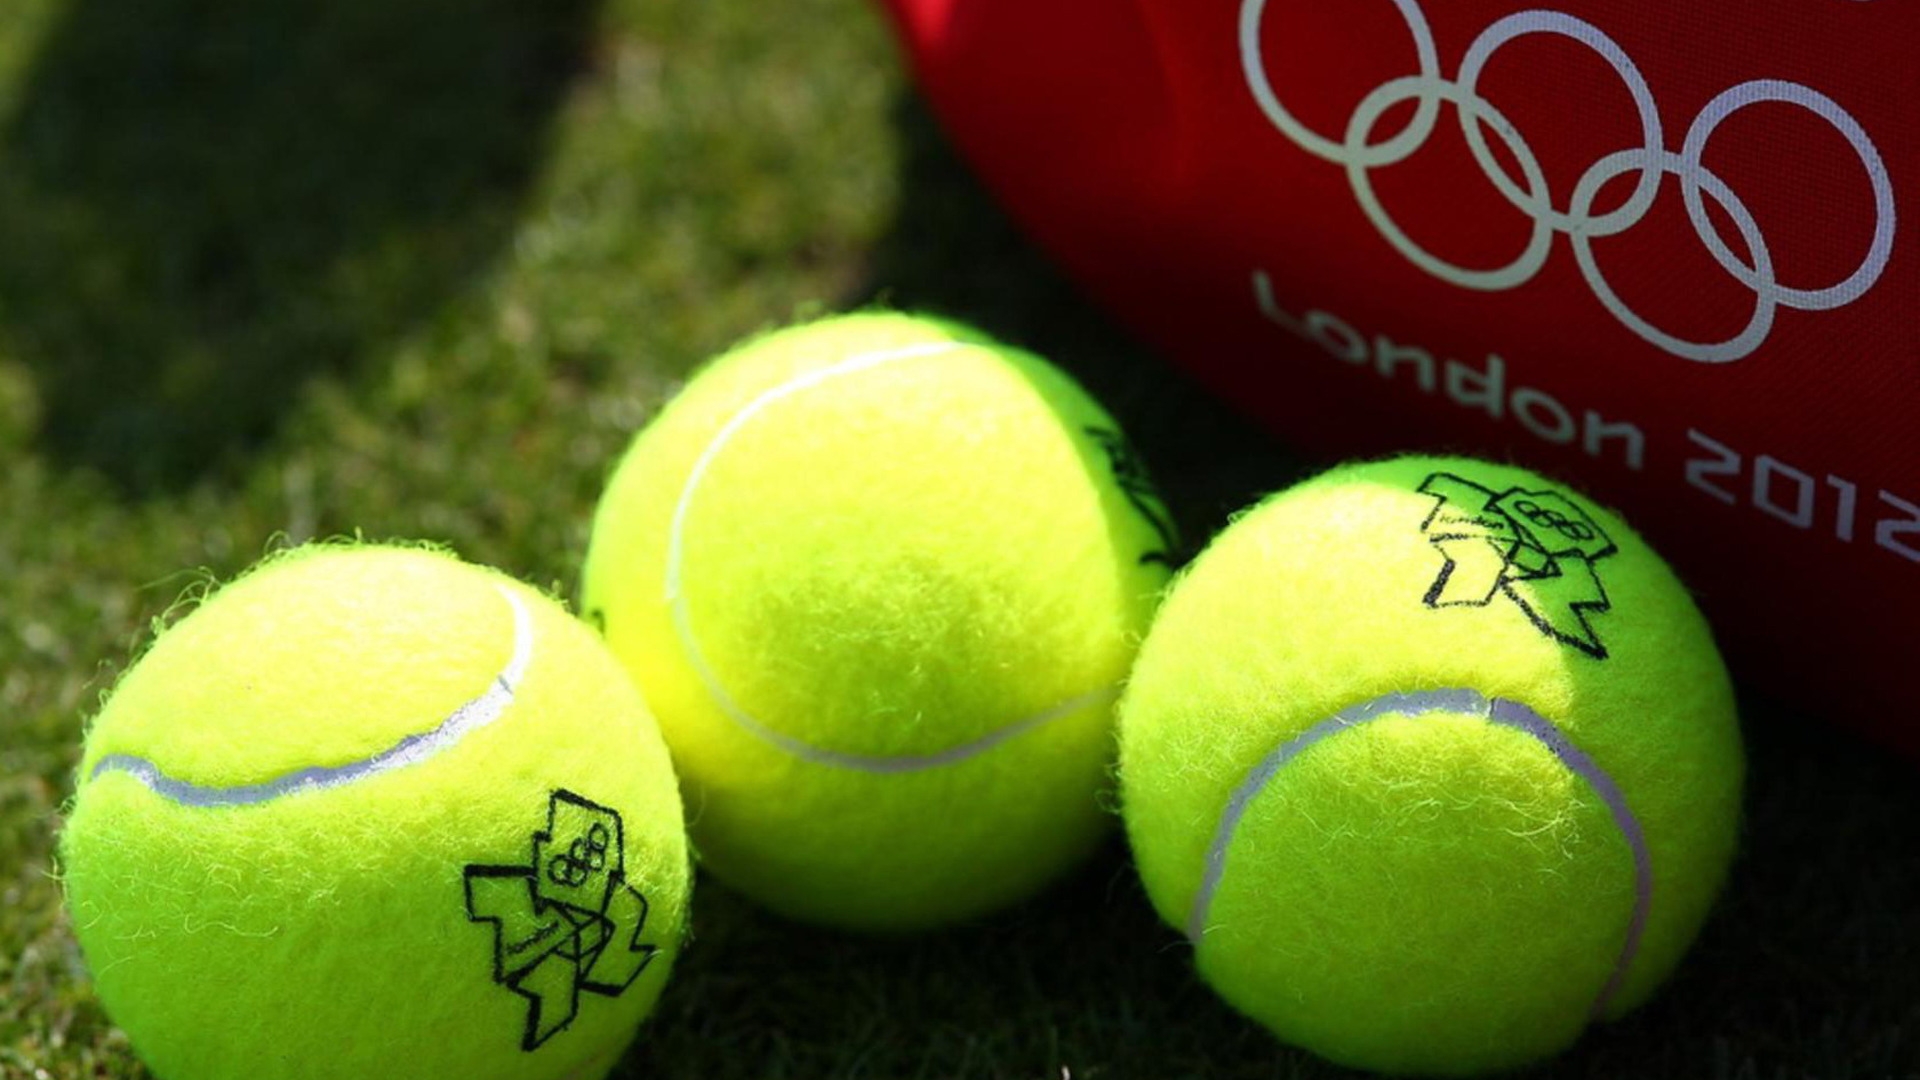 London 2012 Olympics Tennis Balls for 1920 x 1080 HDTV 1080p resolution